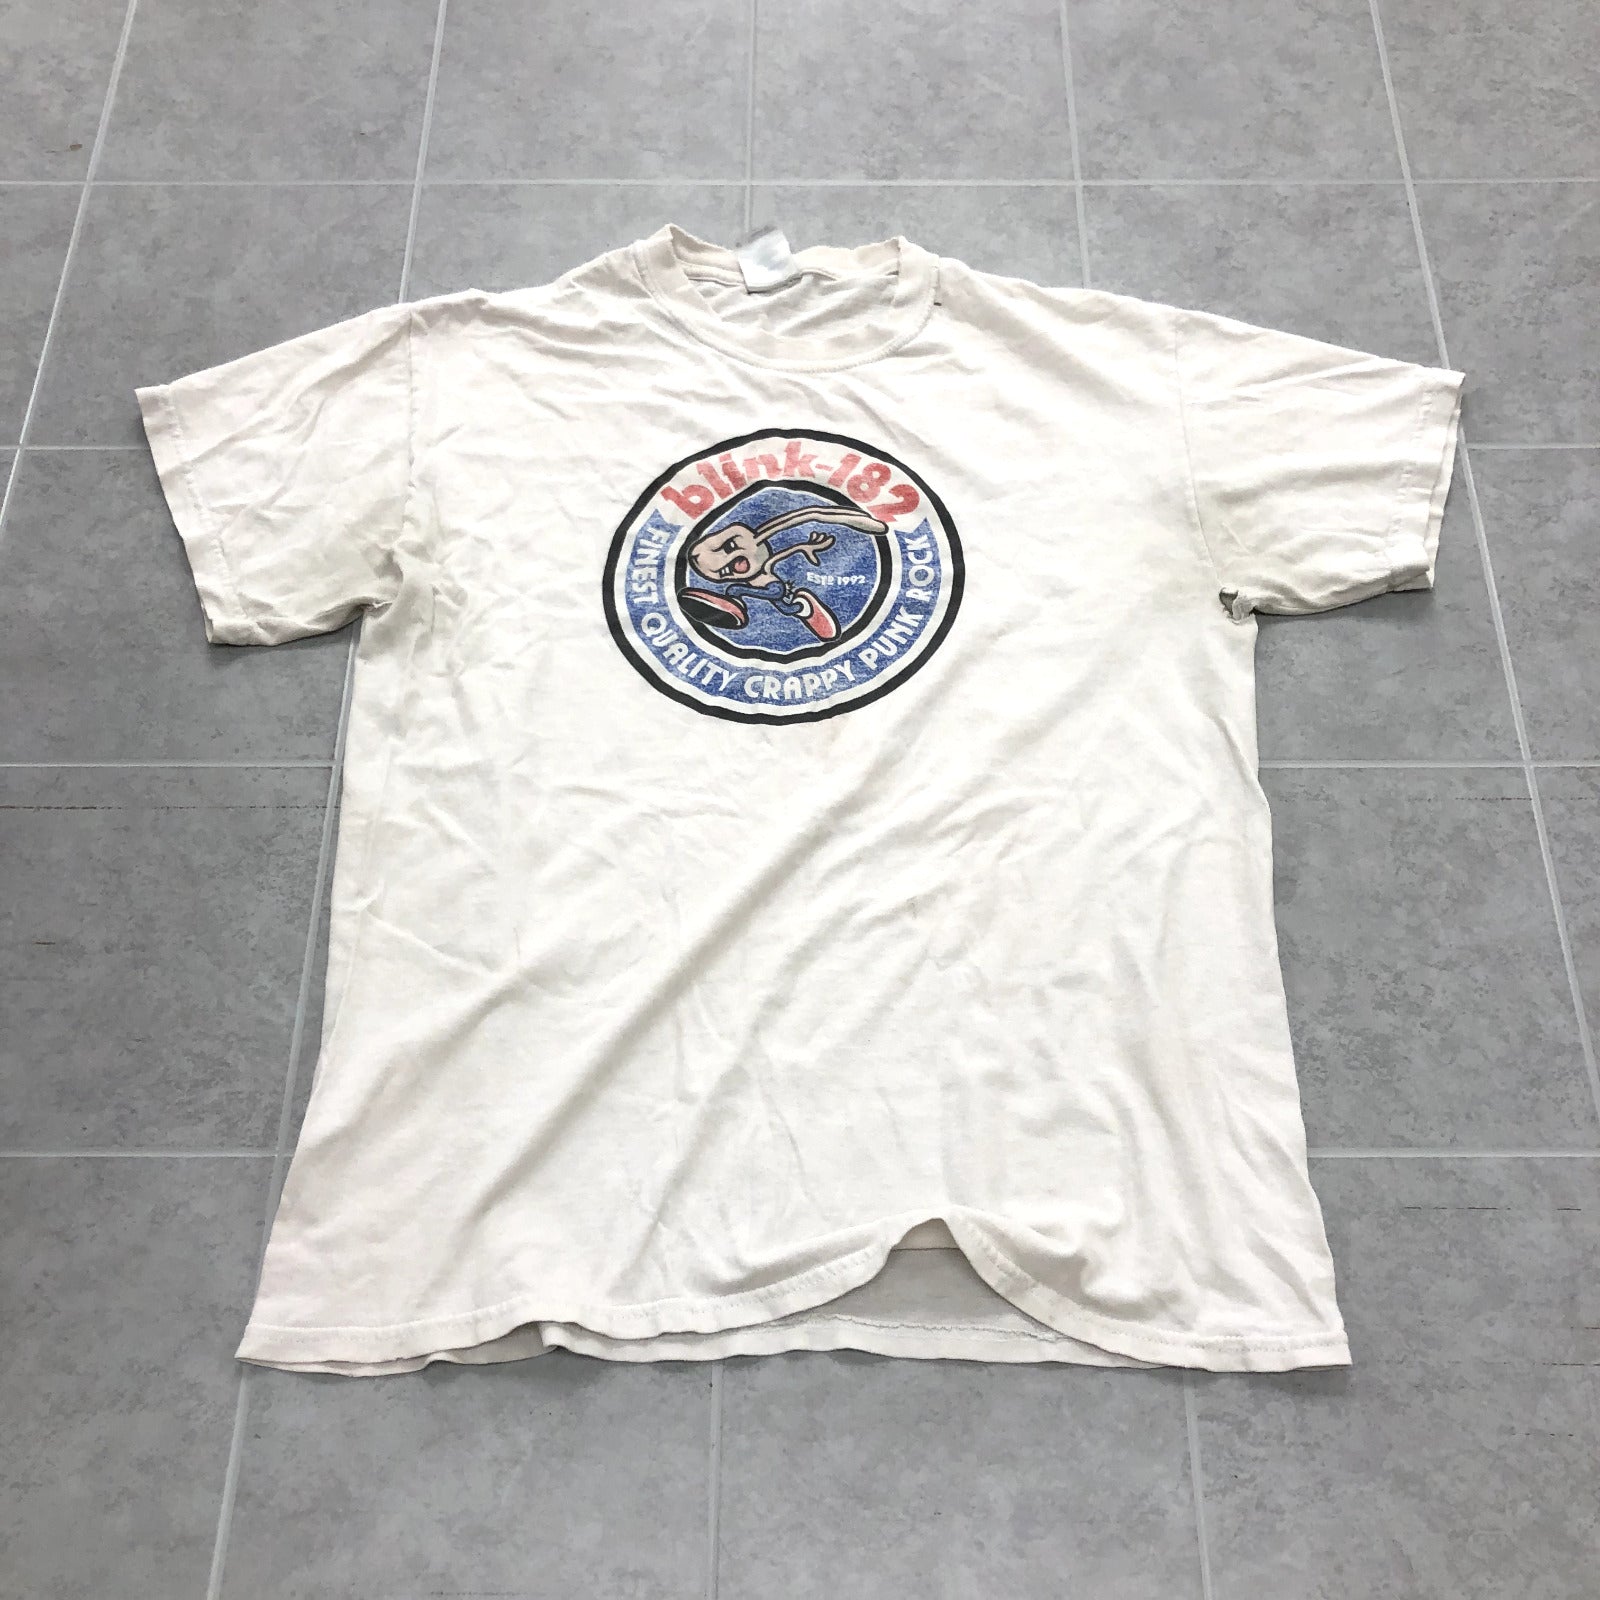 Vintage Gildan White Short Sleeve Blink 182 2011 Tour T-shirt Adult Size M